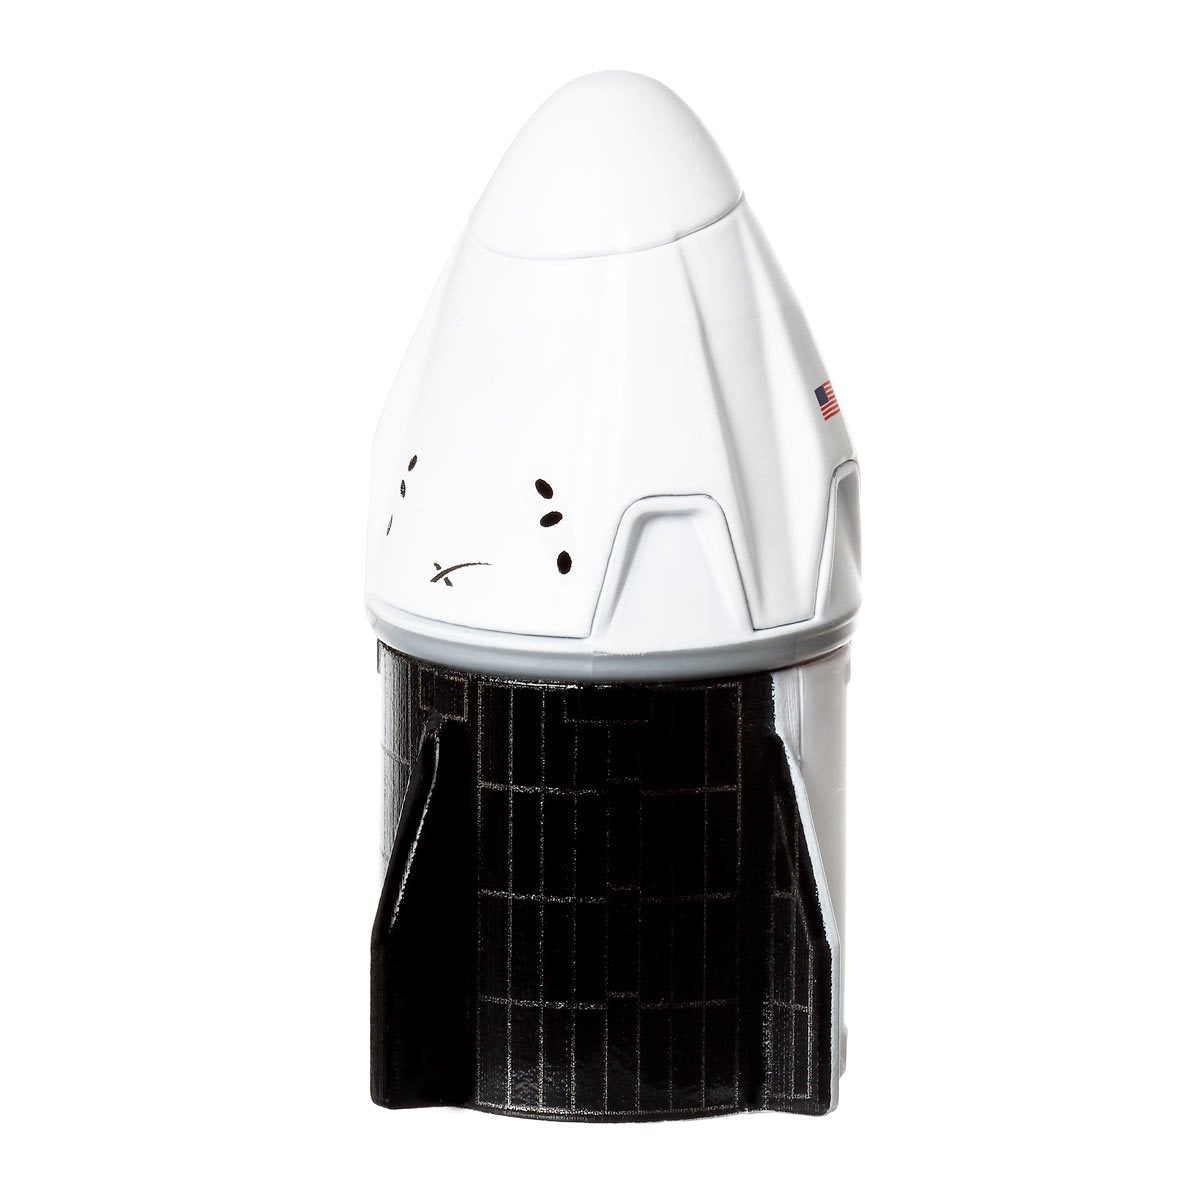 Matchbox SpaceX Dragon Capsule